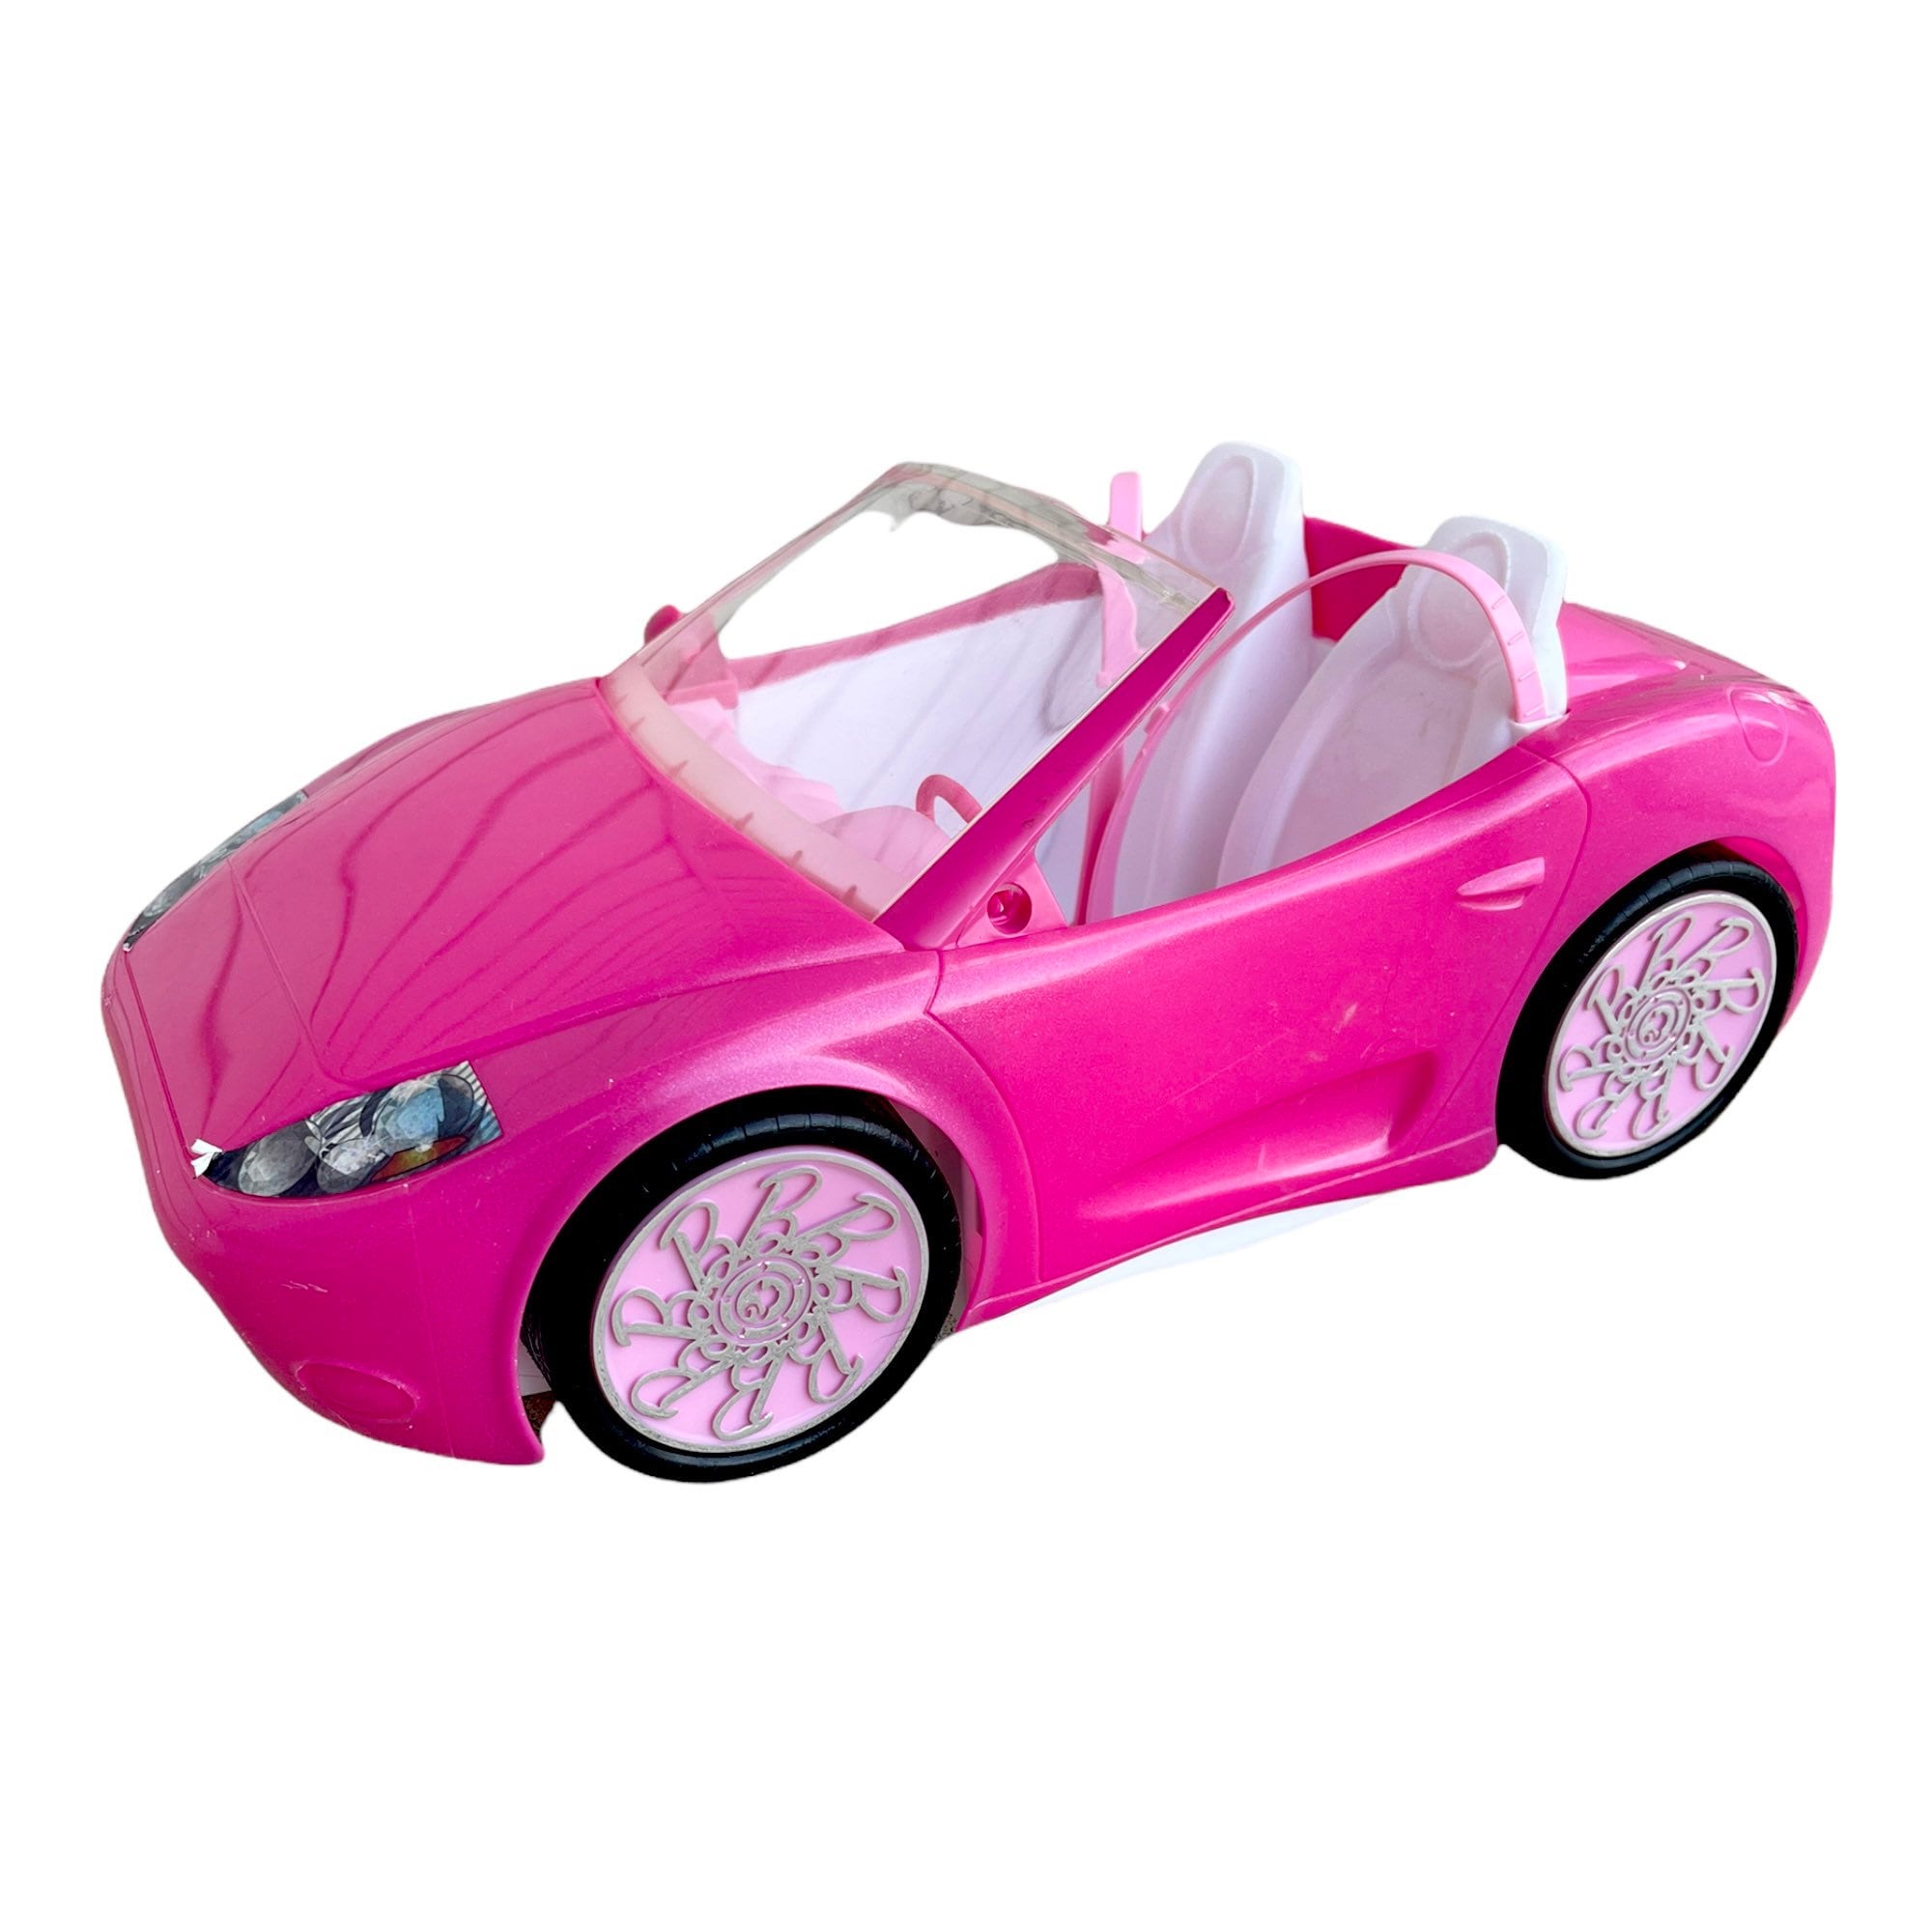 2010 Mattel Barbie Glam Pink Sports Car Convertible - Etsy 日本